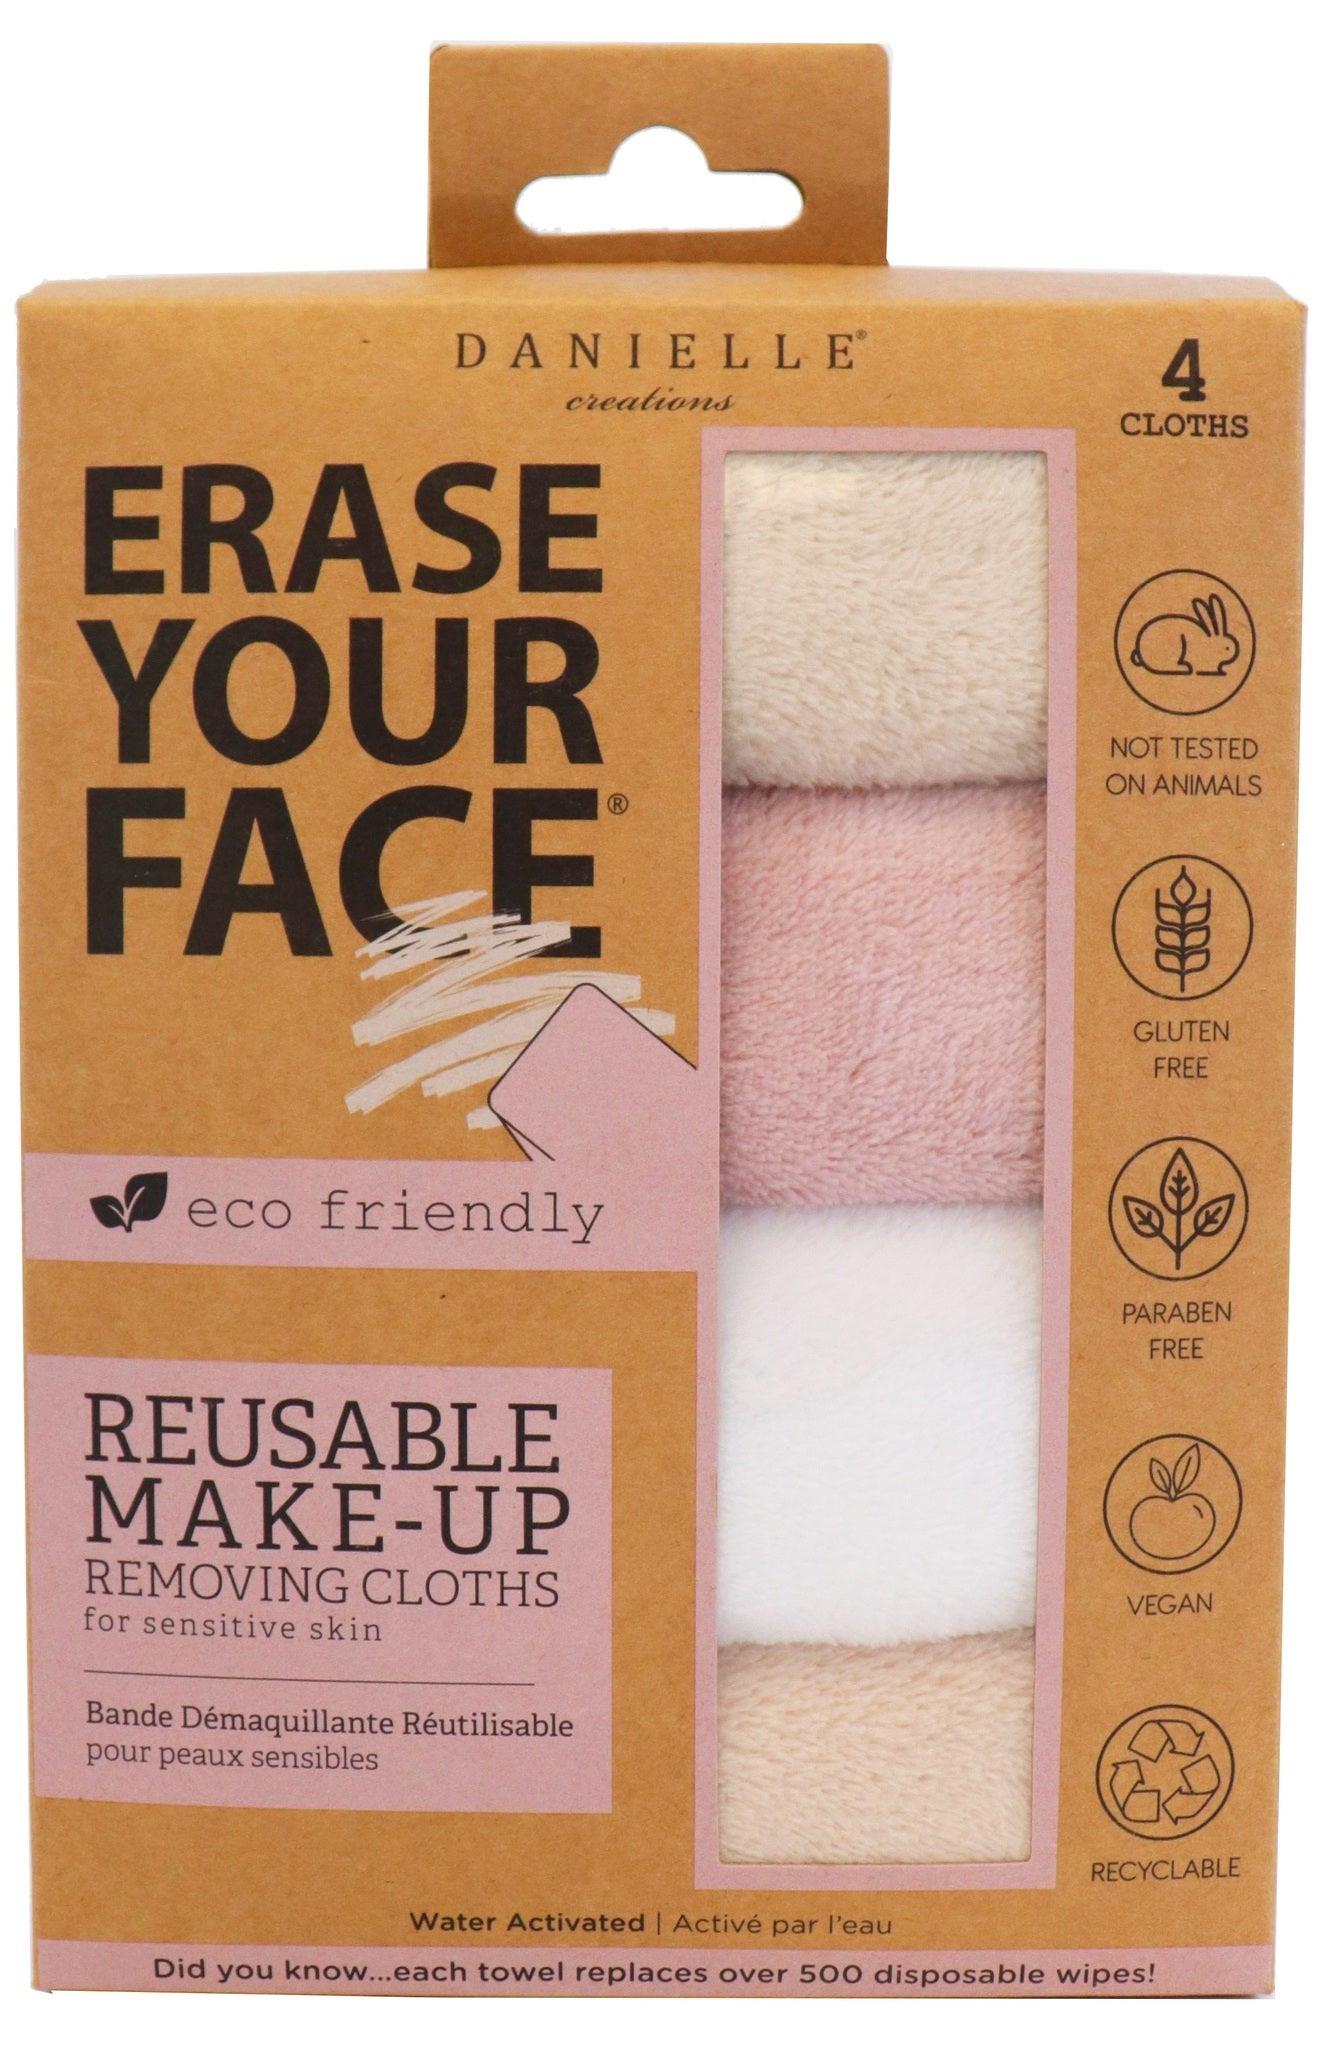 Danielle Erase Your Face Makeup Remover Cloth Set of 4